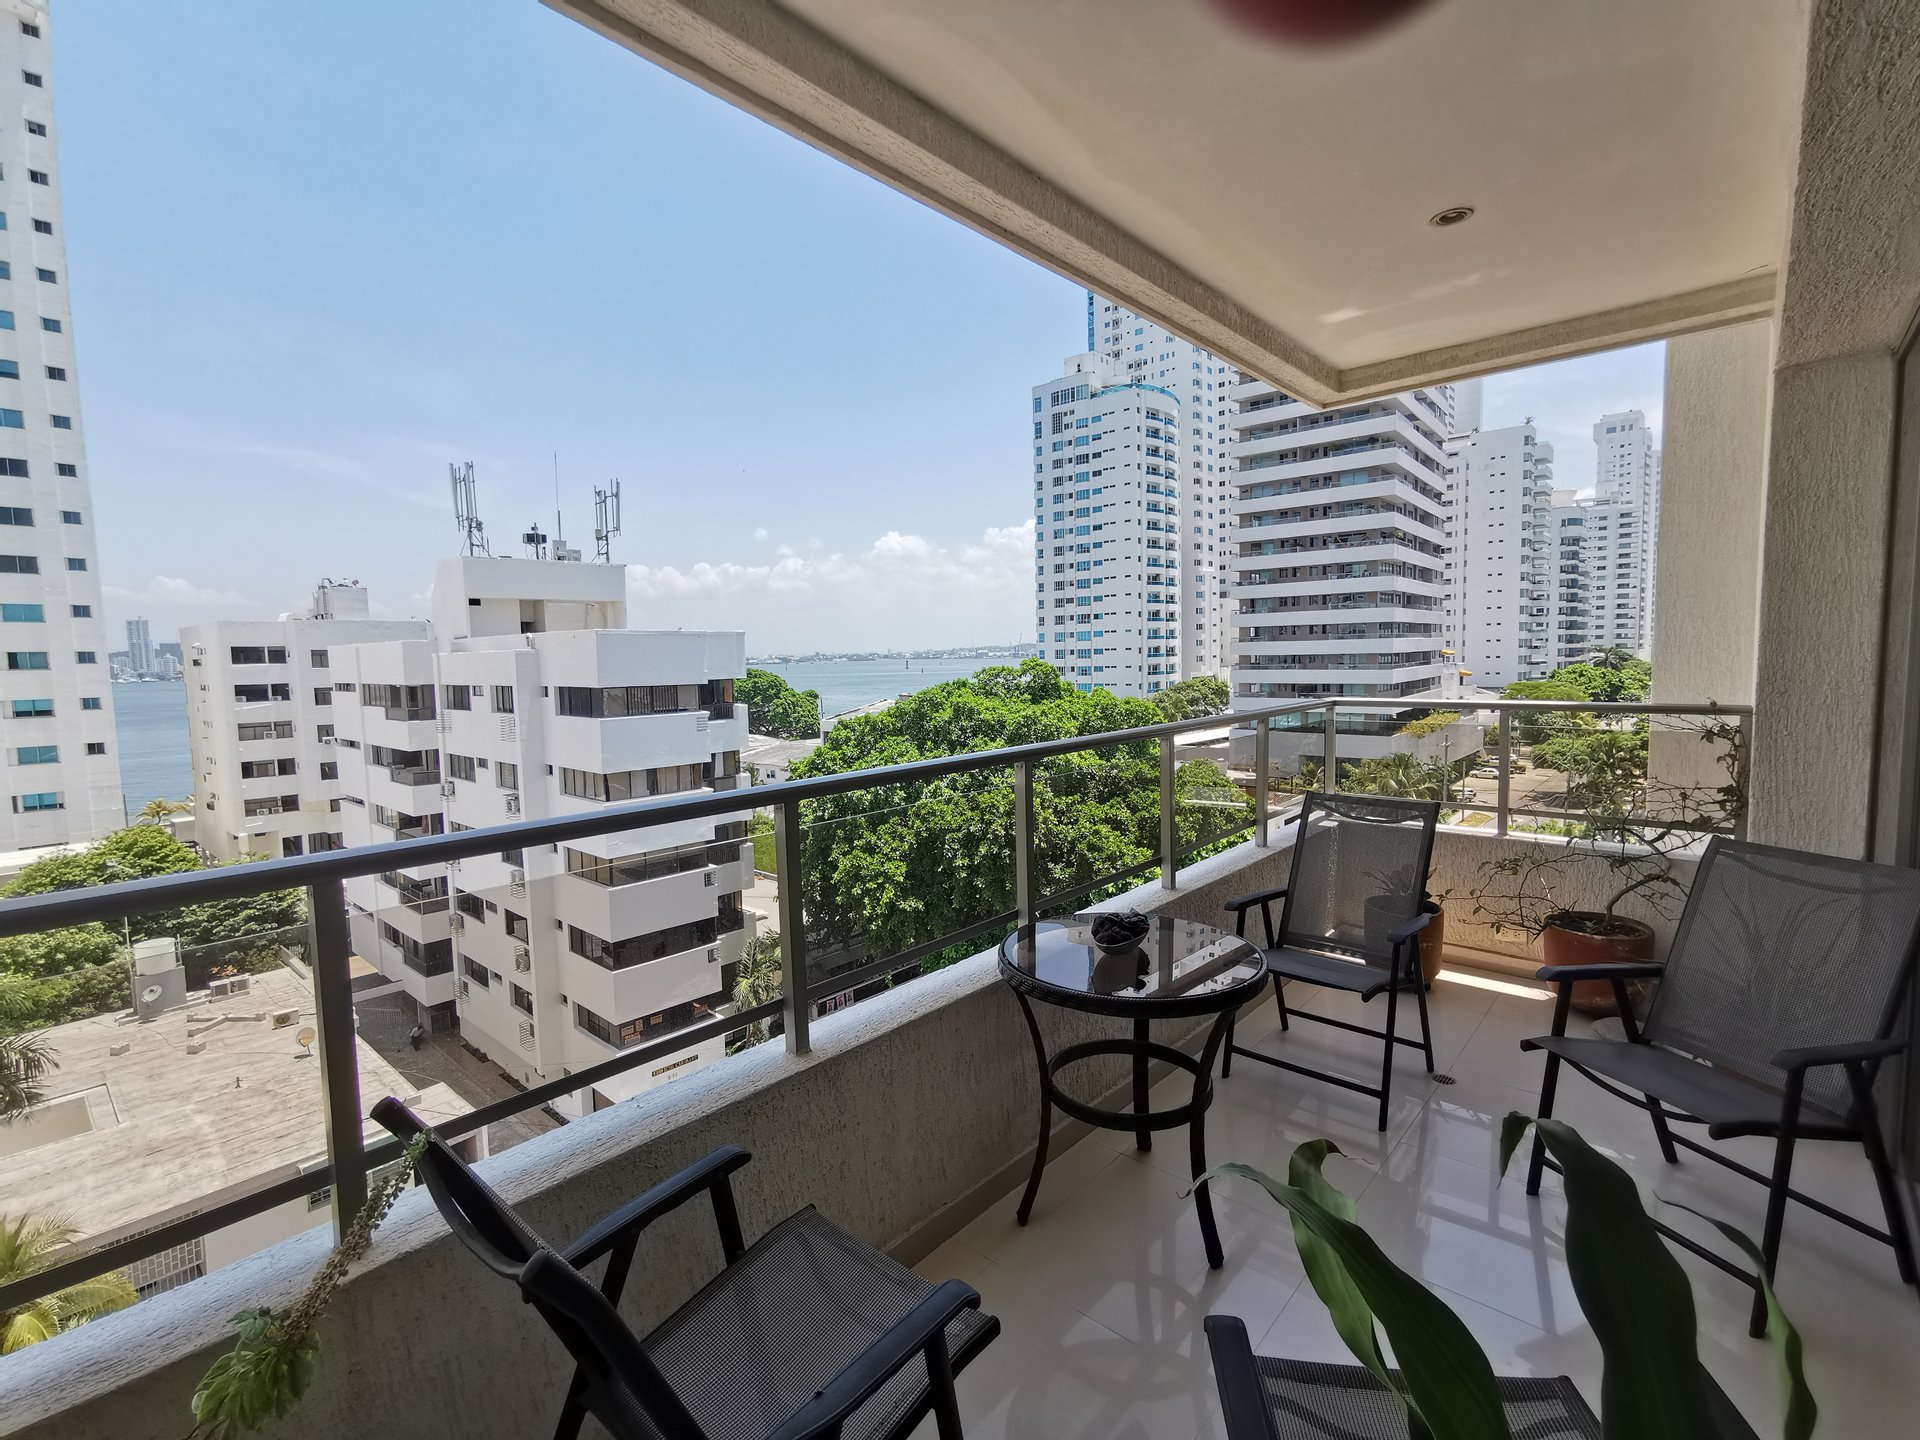 Ad Sale Apartment Cartagena de Indias Castillogrande (130001) ref:V0111CI